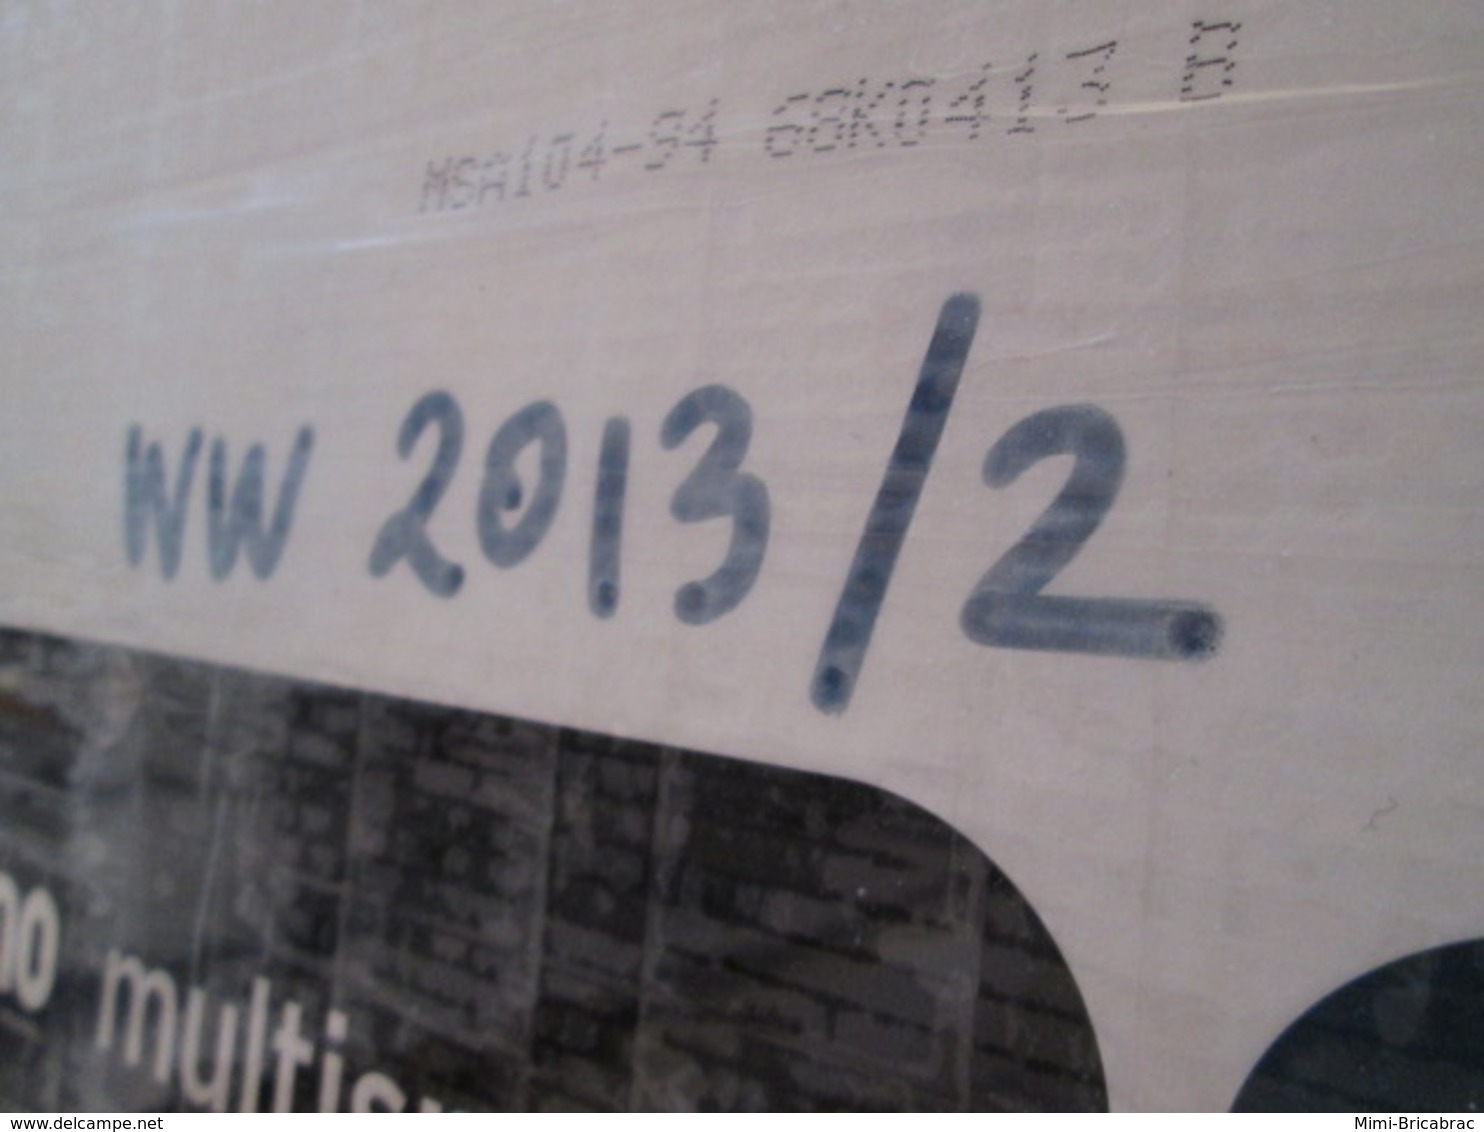 WW2013-2 Revue maquettiste plastique / TAMIYA MODEL MAGAZINE n°77 de 2005 valait 5,95€ , sommaire en photo 2 ou 3